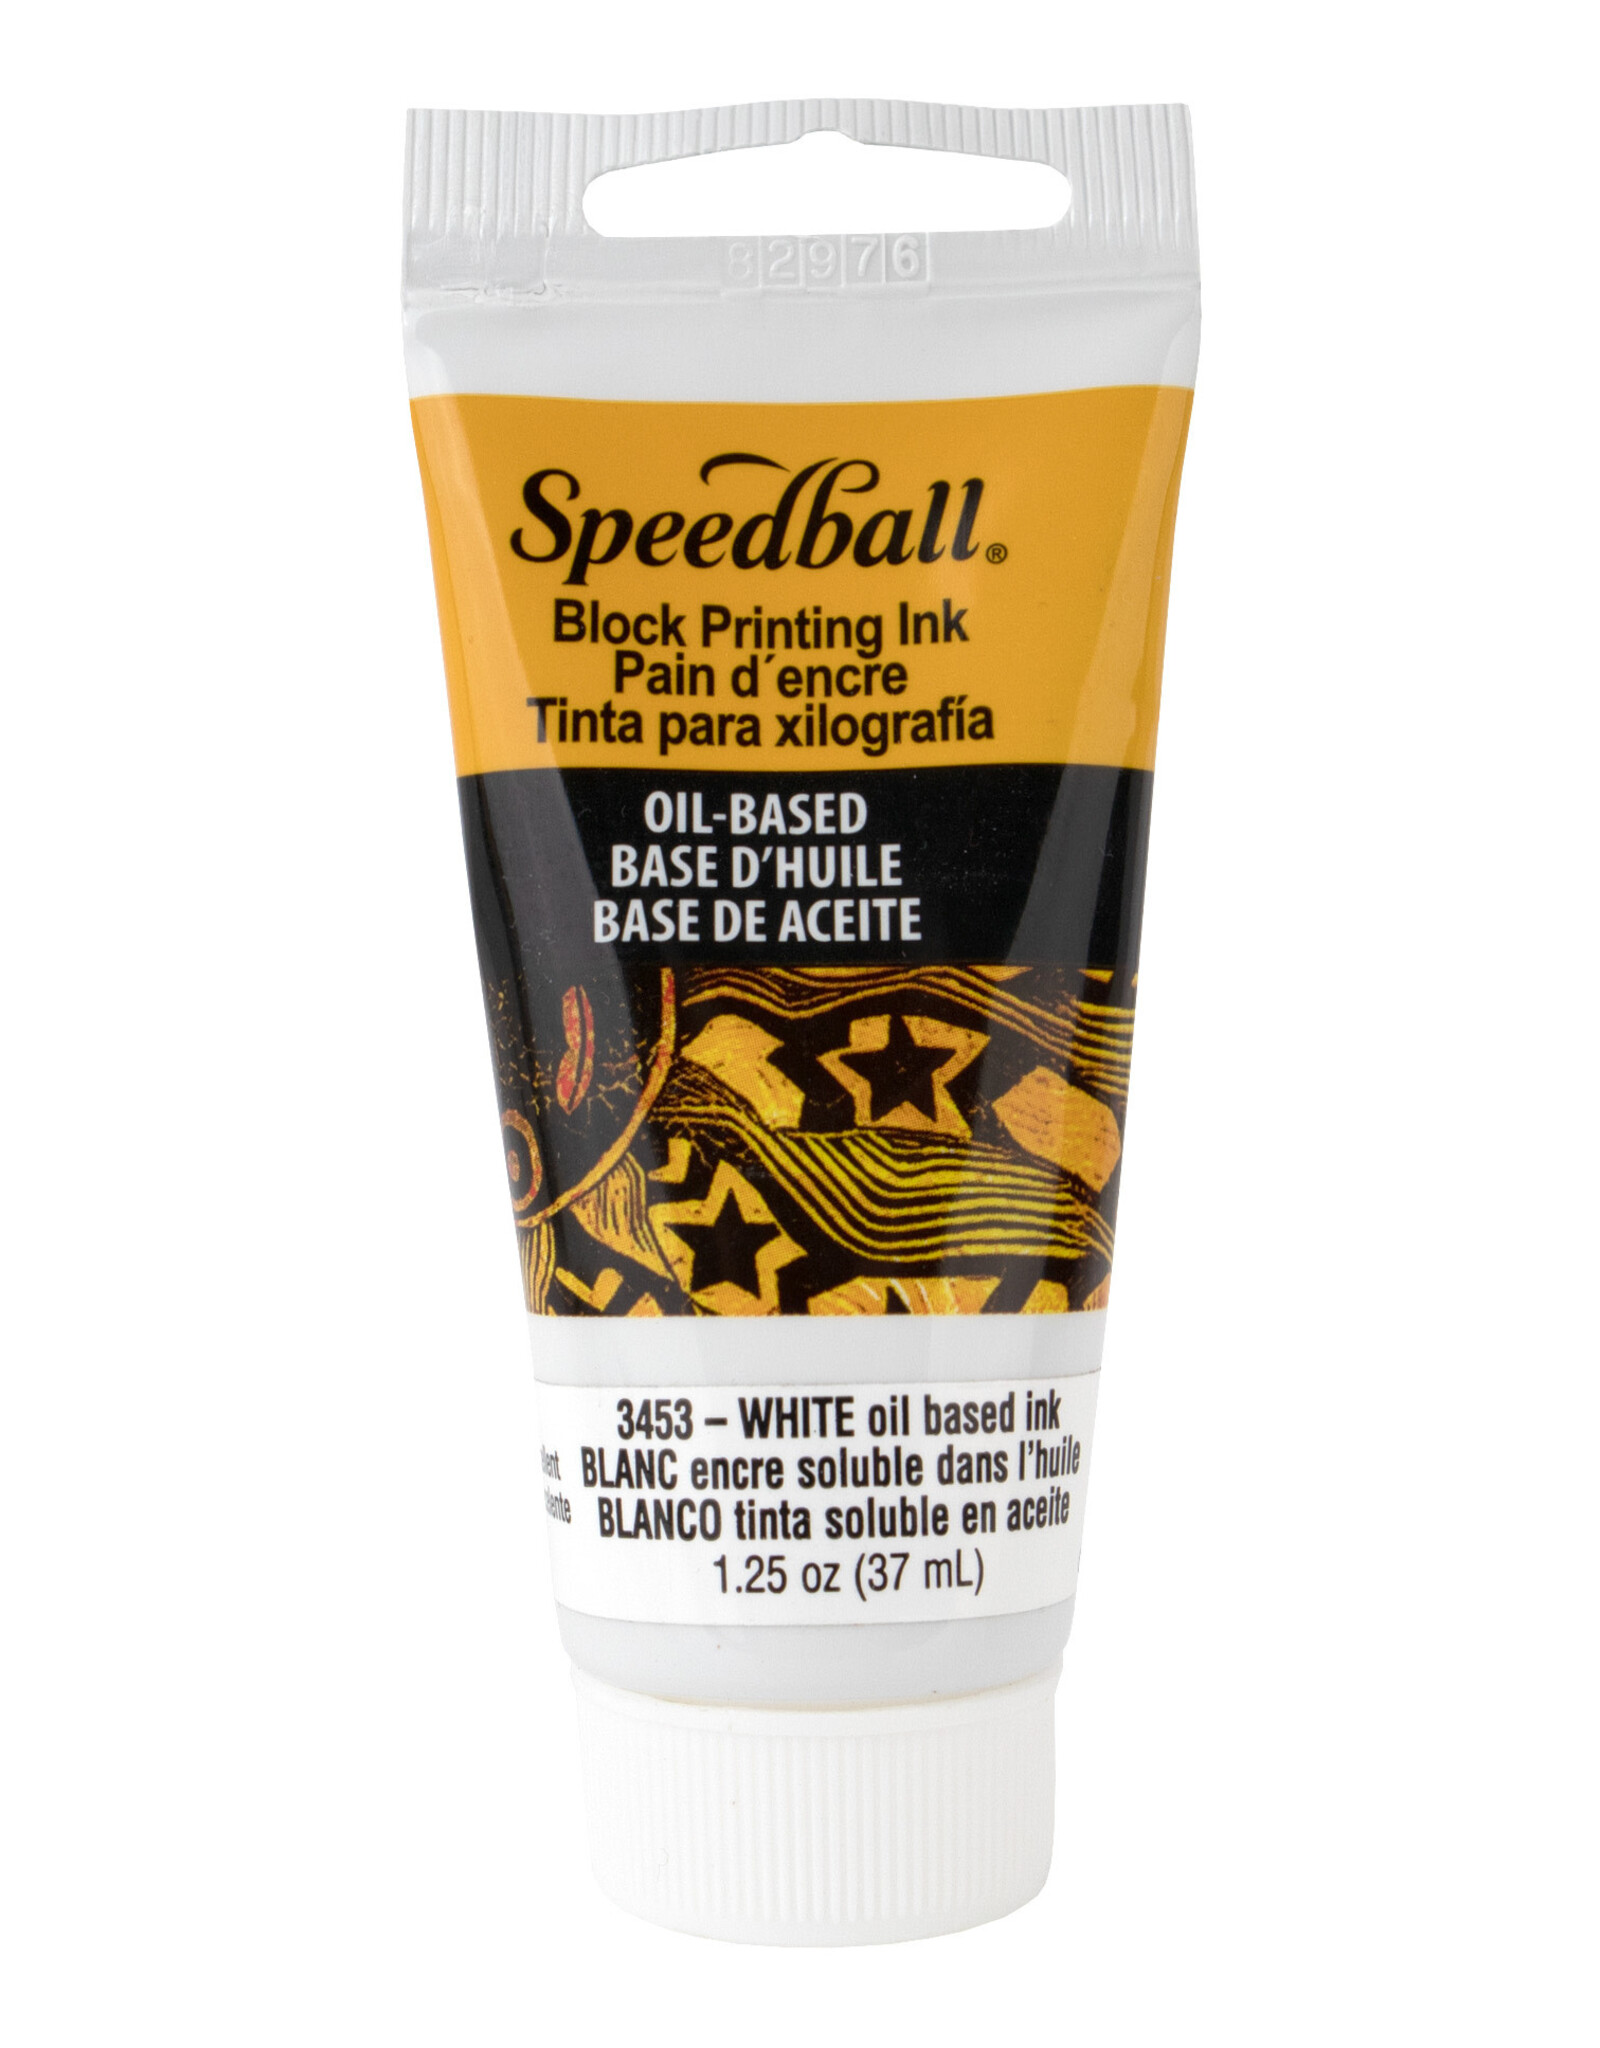 SPEEDBALL ART PRODUCTS Speedball Oil-Based Block Printing Ink, White, 1.25oz